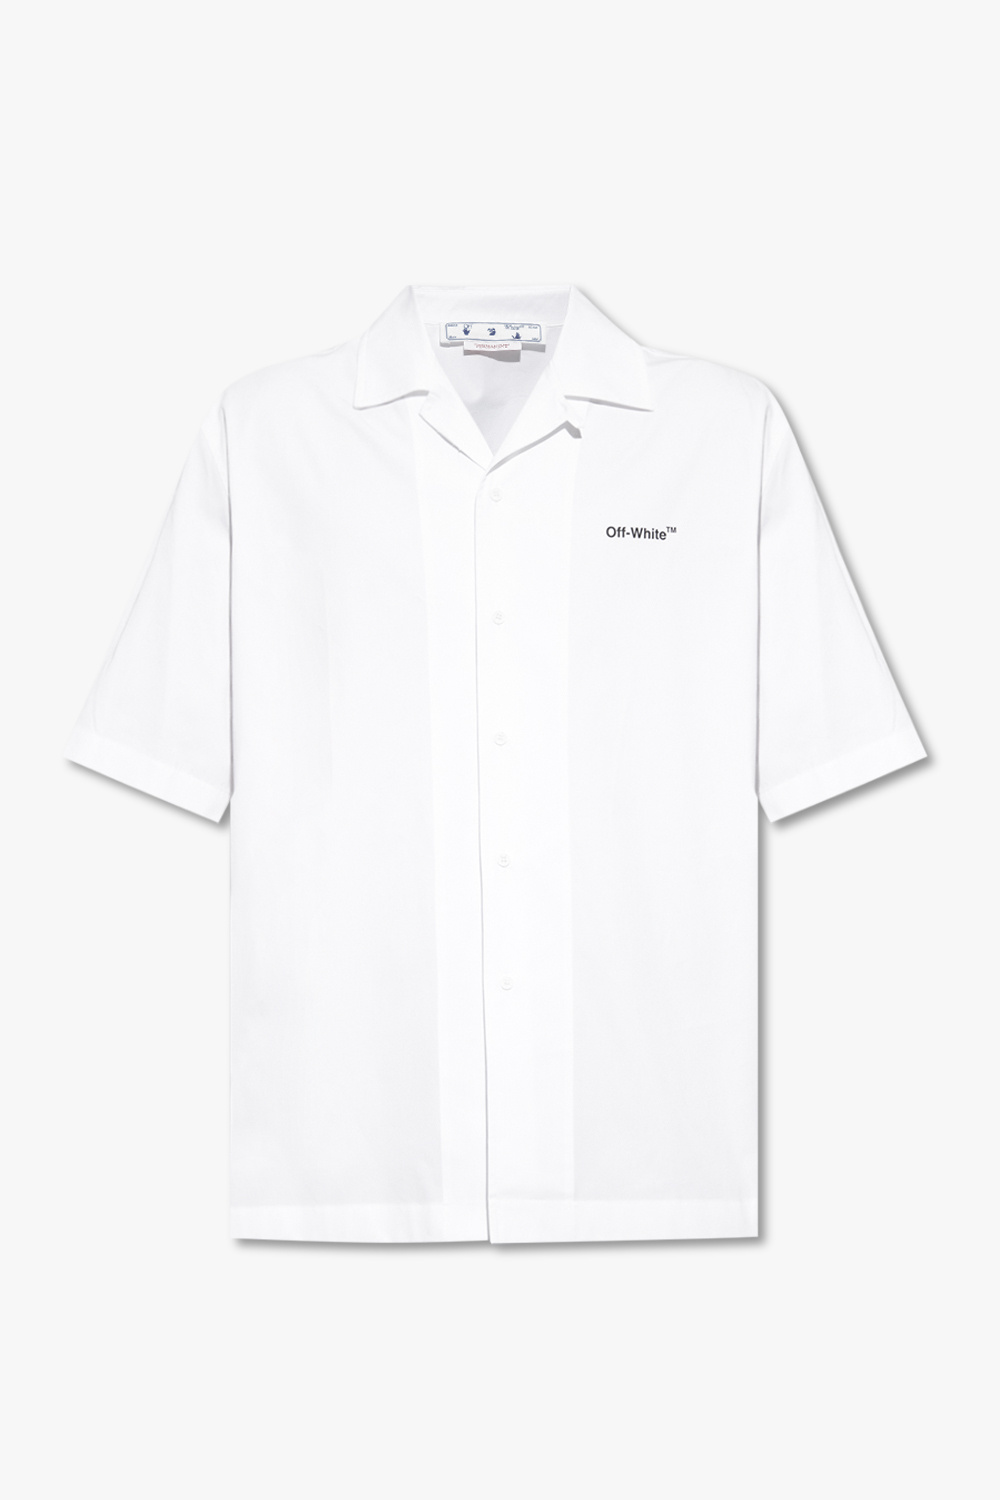 Off-White Colton Shirt Jacket